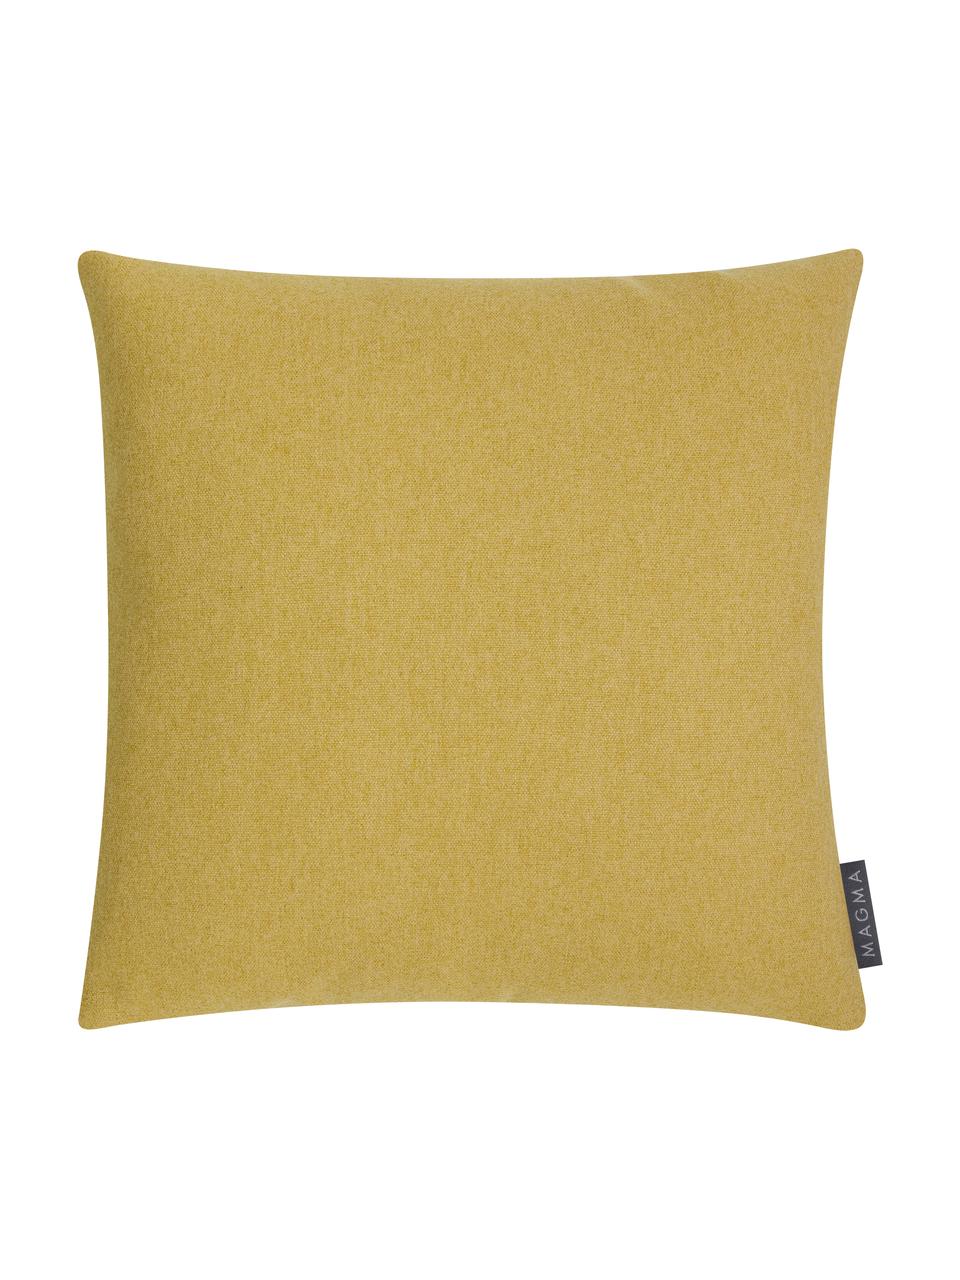 Bavlněný povlak na polštář s žakárovým vzorem Annie, Hořčičná žlutá, více barev